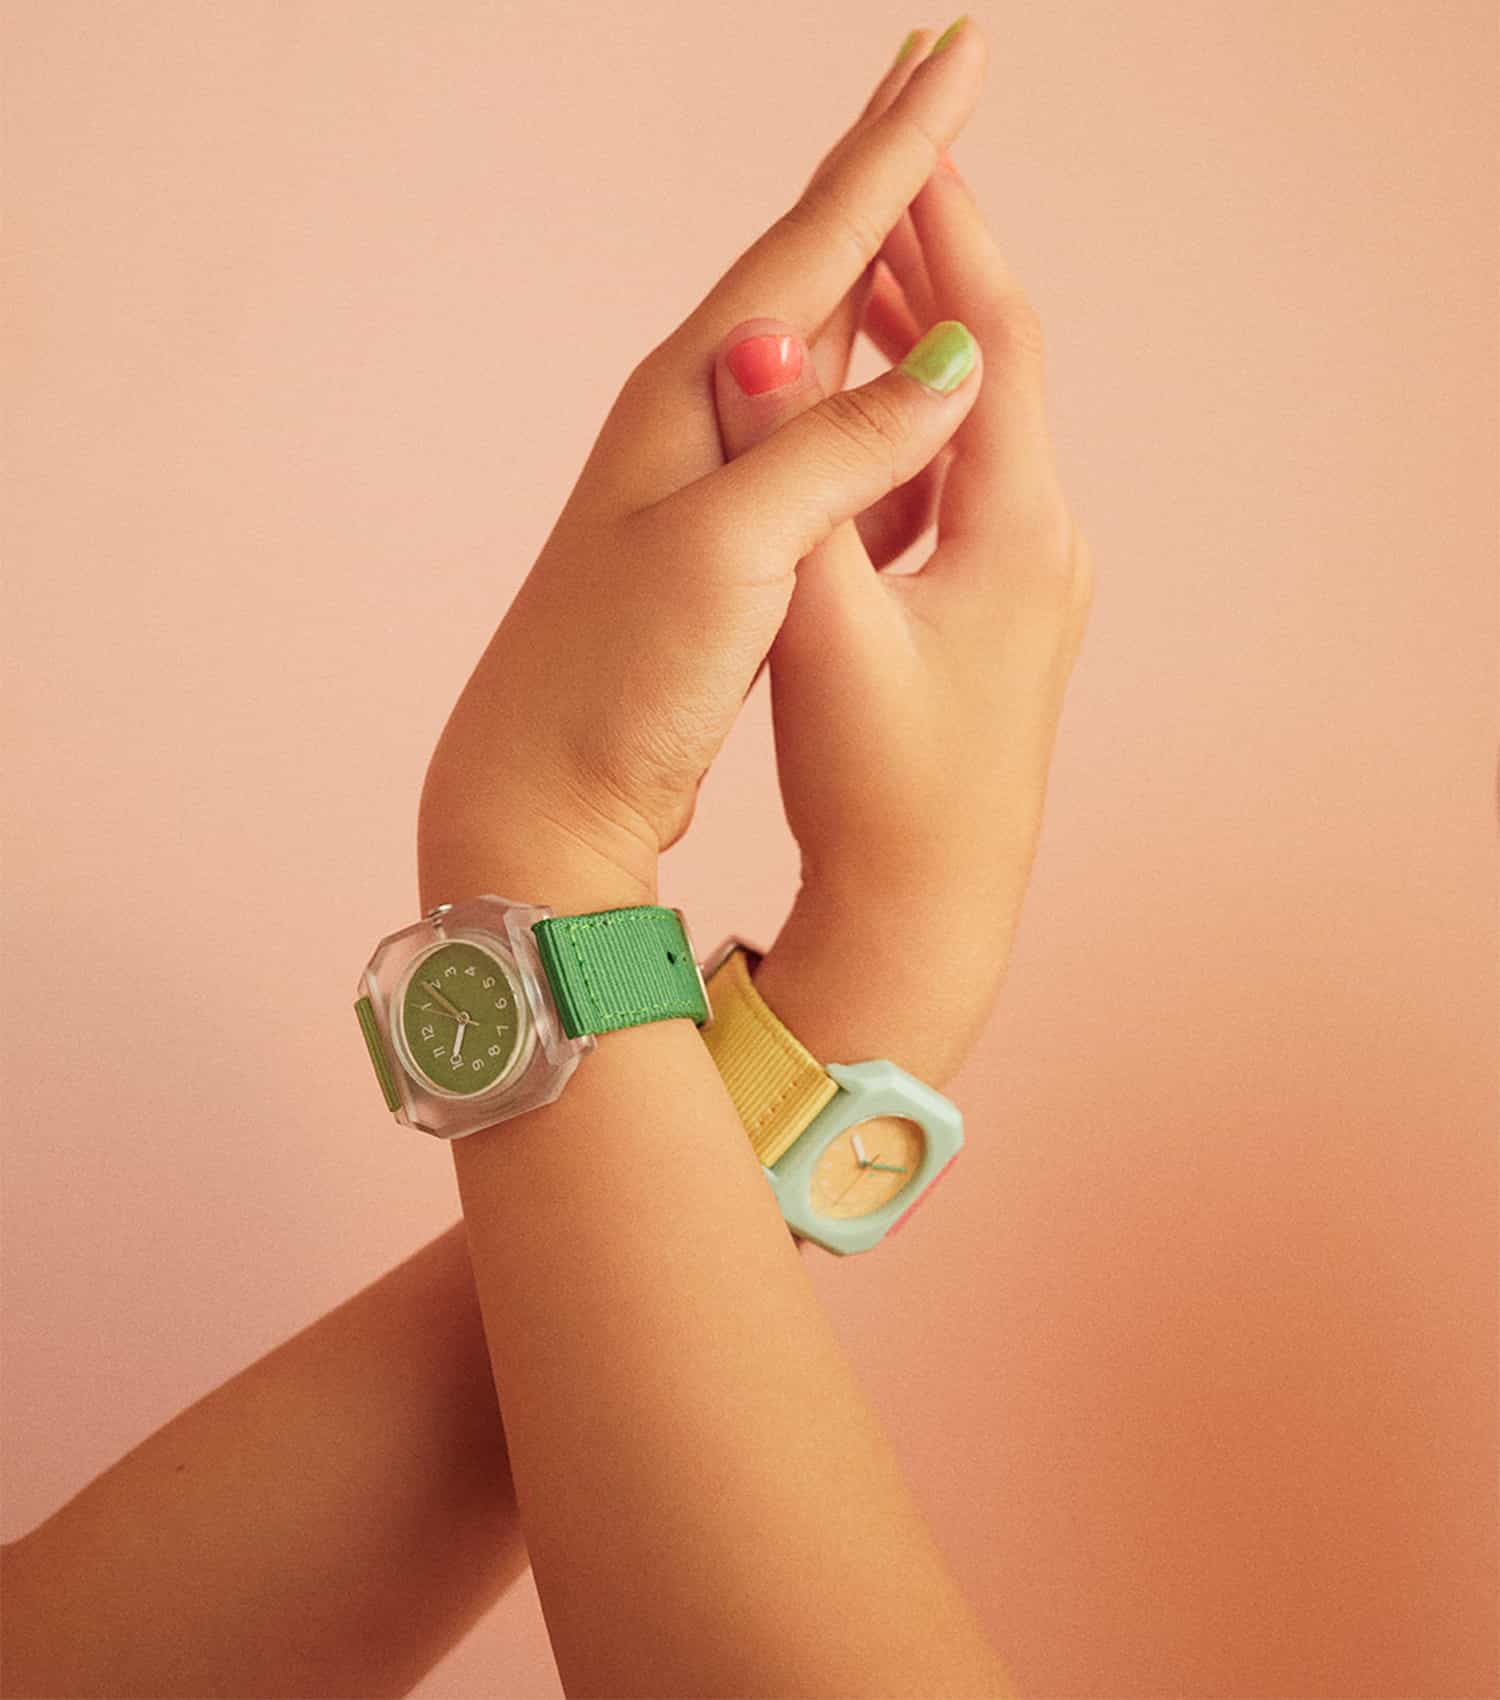 Mini Kyomo sustainable kids watch - Green smoothie